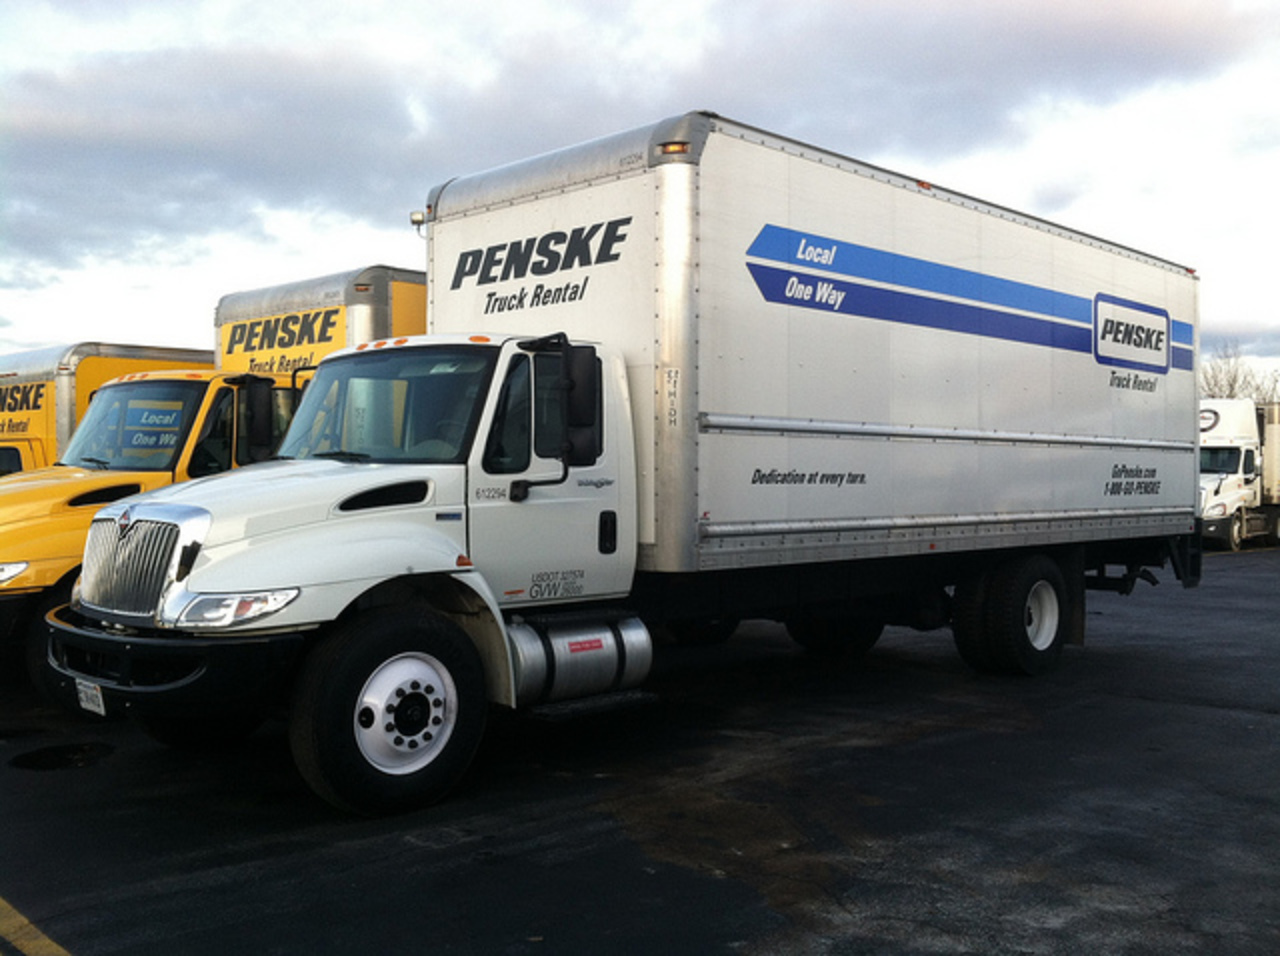 Penske Truck Rental No. 612294 | Flickr - Photo Sharing!